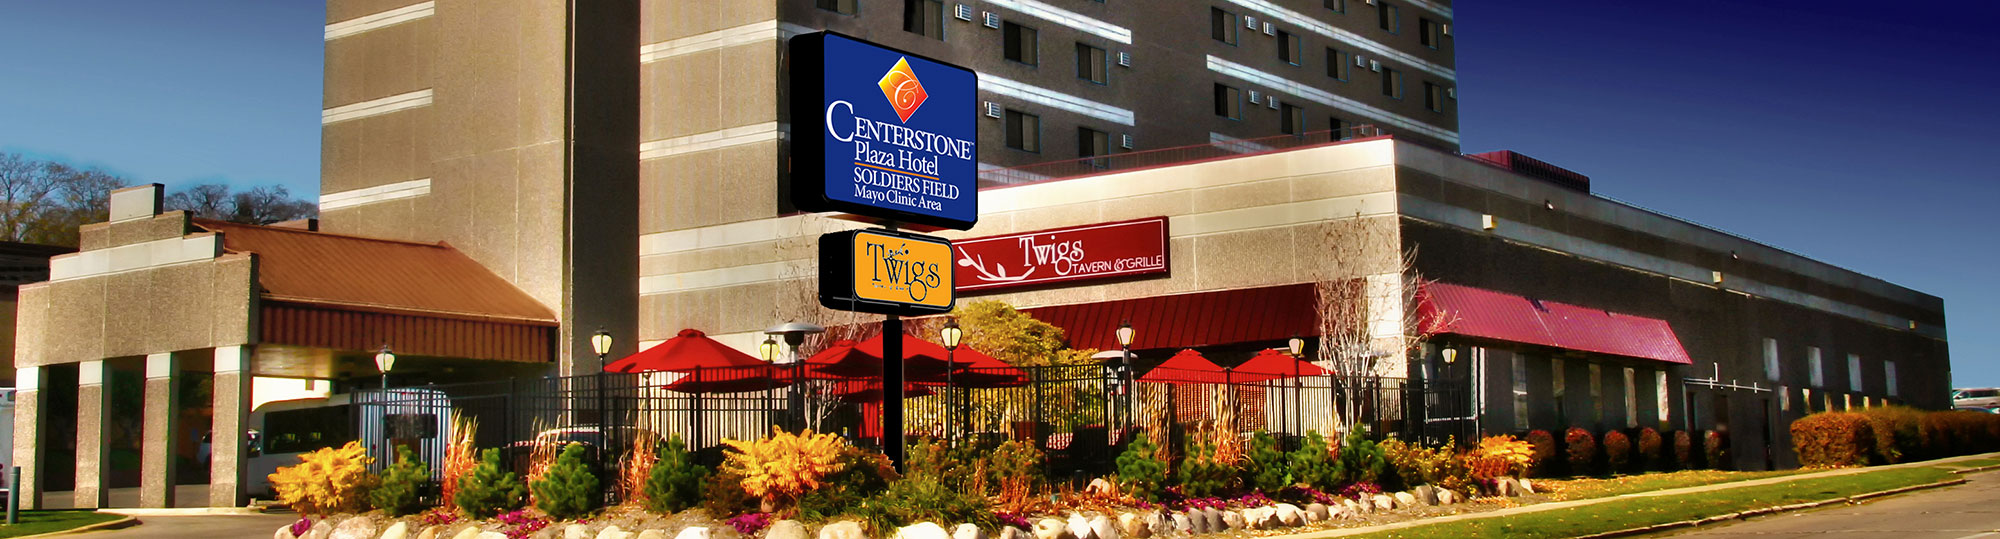 Centerstone Hotel Rochester